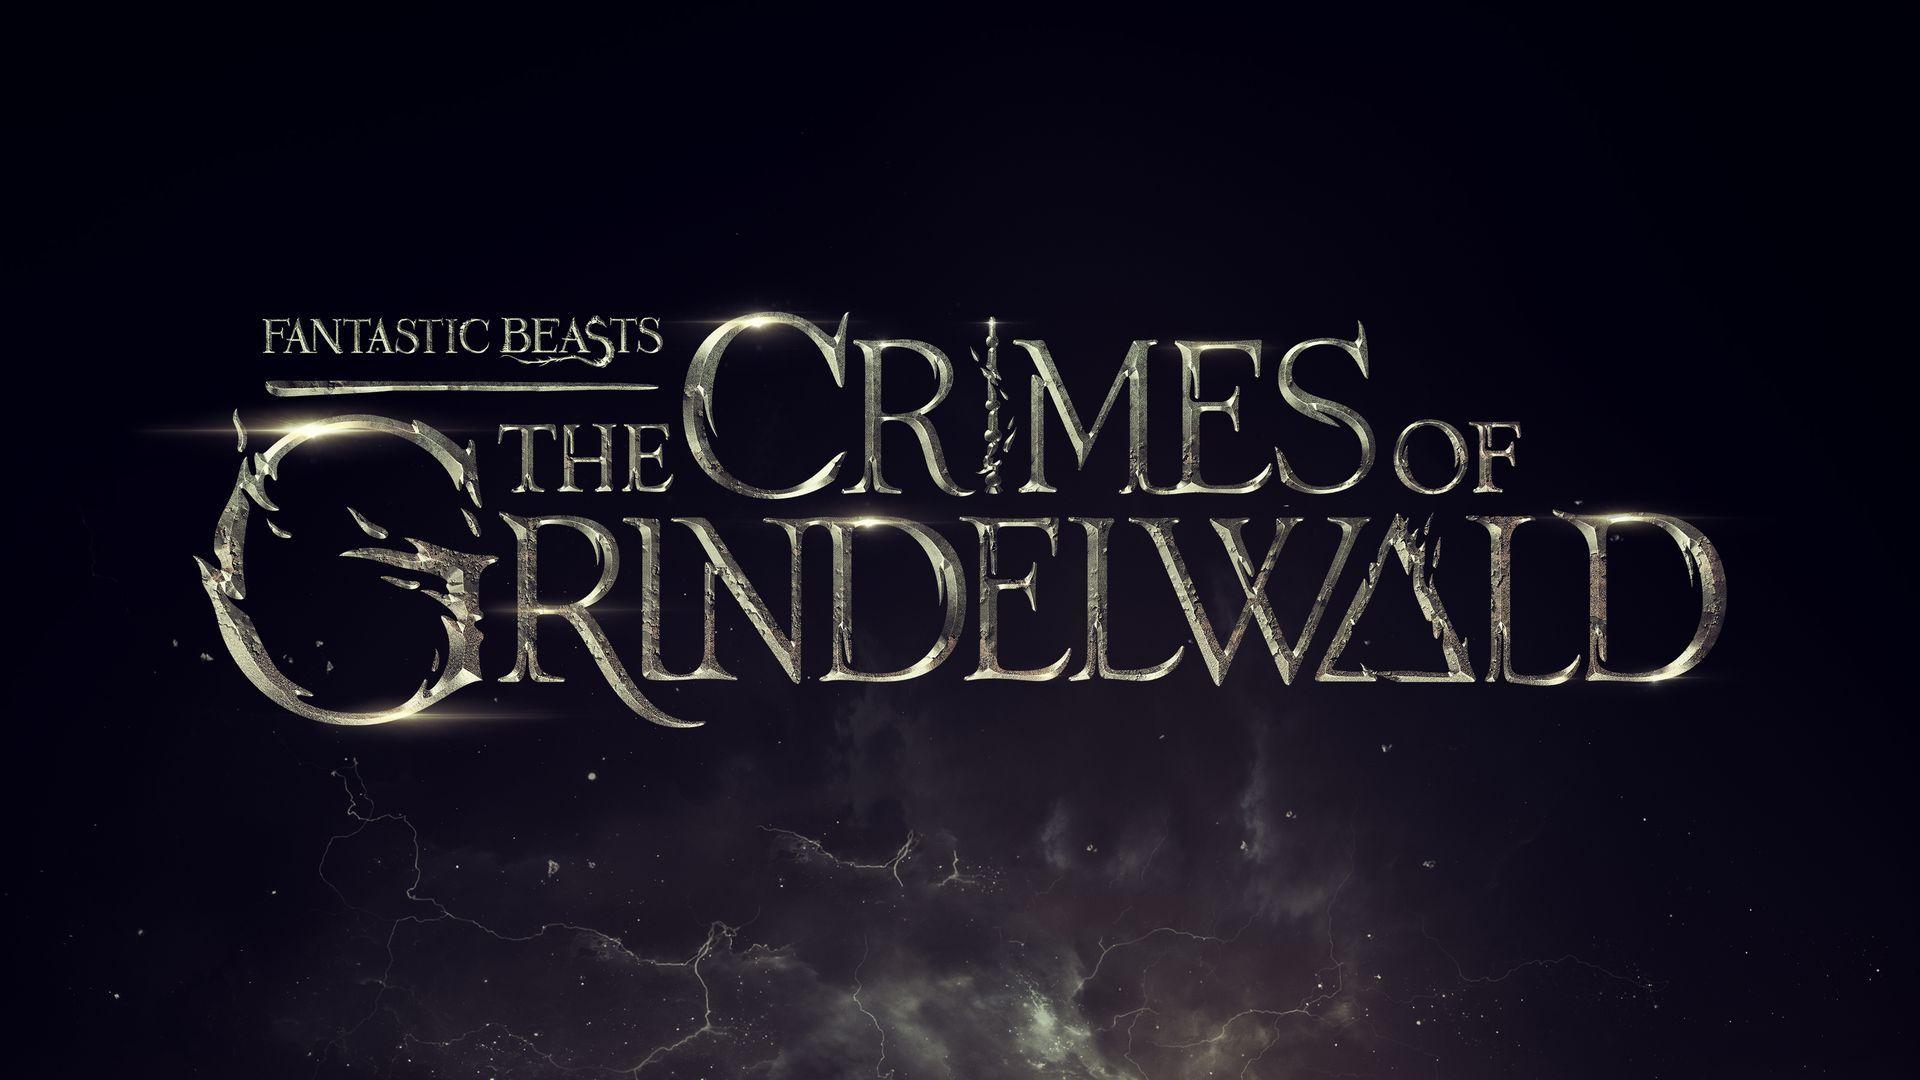 1920x1080 Fantastic Beasts The Crimes of Grindelwald Logo hình nền